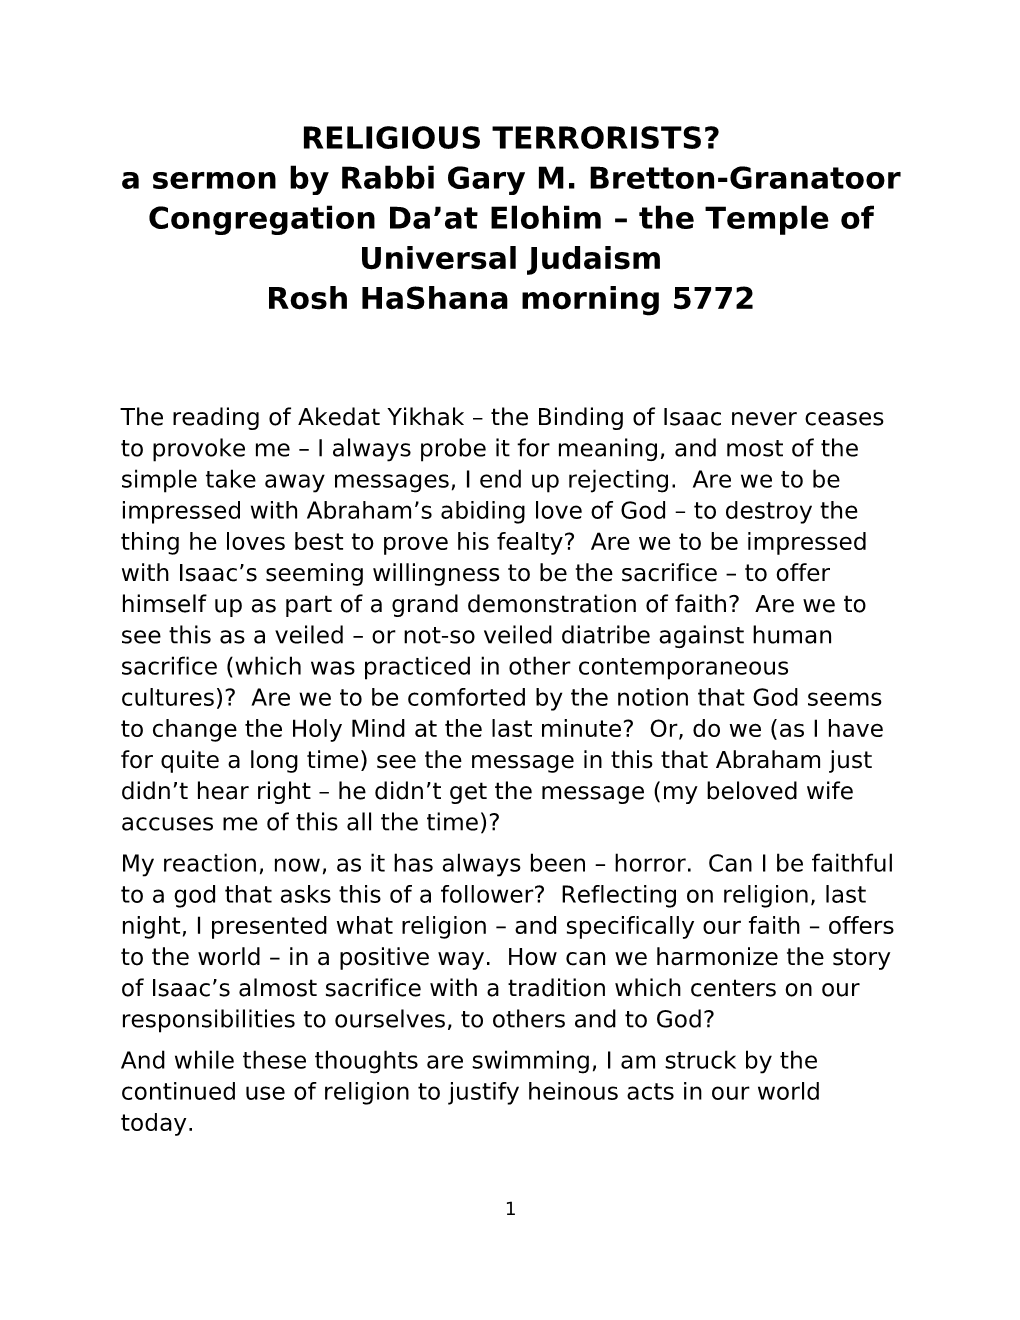 RELIGIOUS TERRORISTS? a Sermon by Rabbi Gary M. Bretton-Granatoor Congregation Da’At Elohim – the Temple of Universal Judaism Rosh Hashana Morning 5772